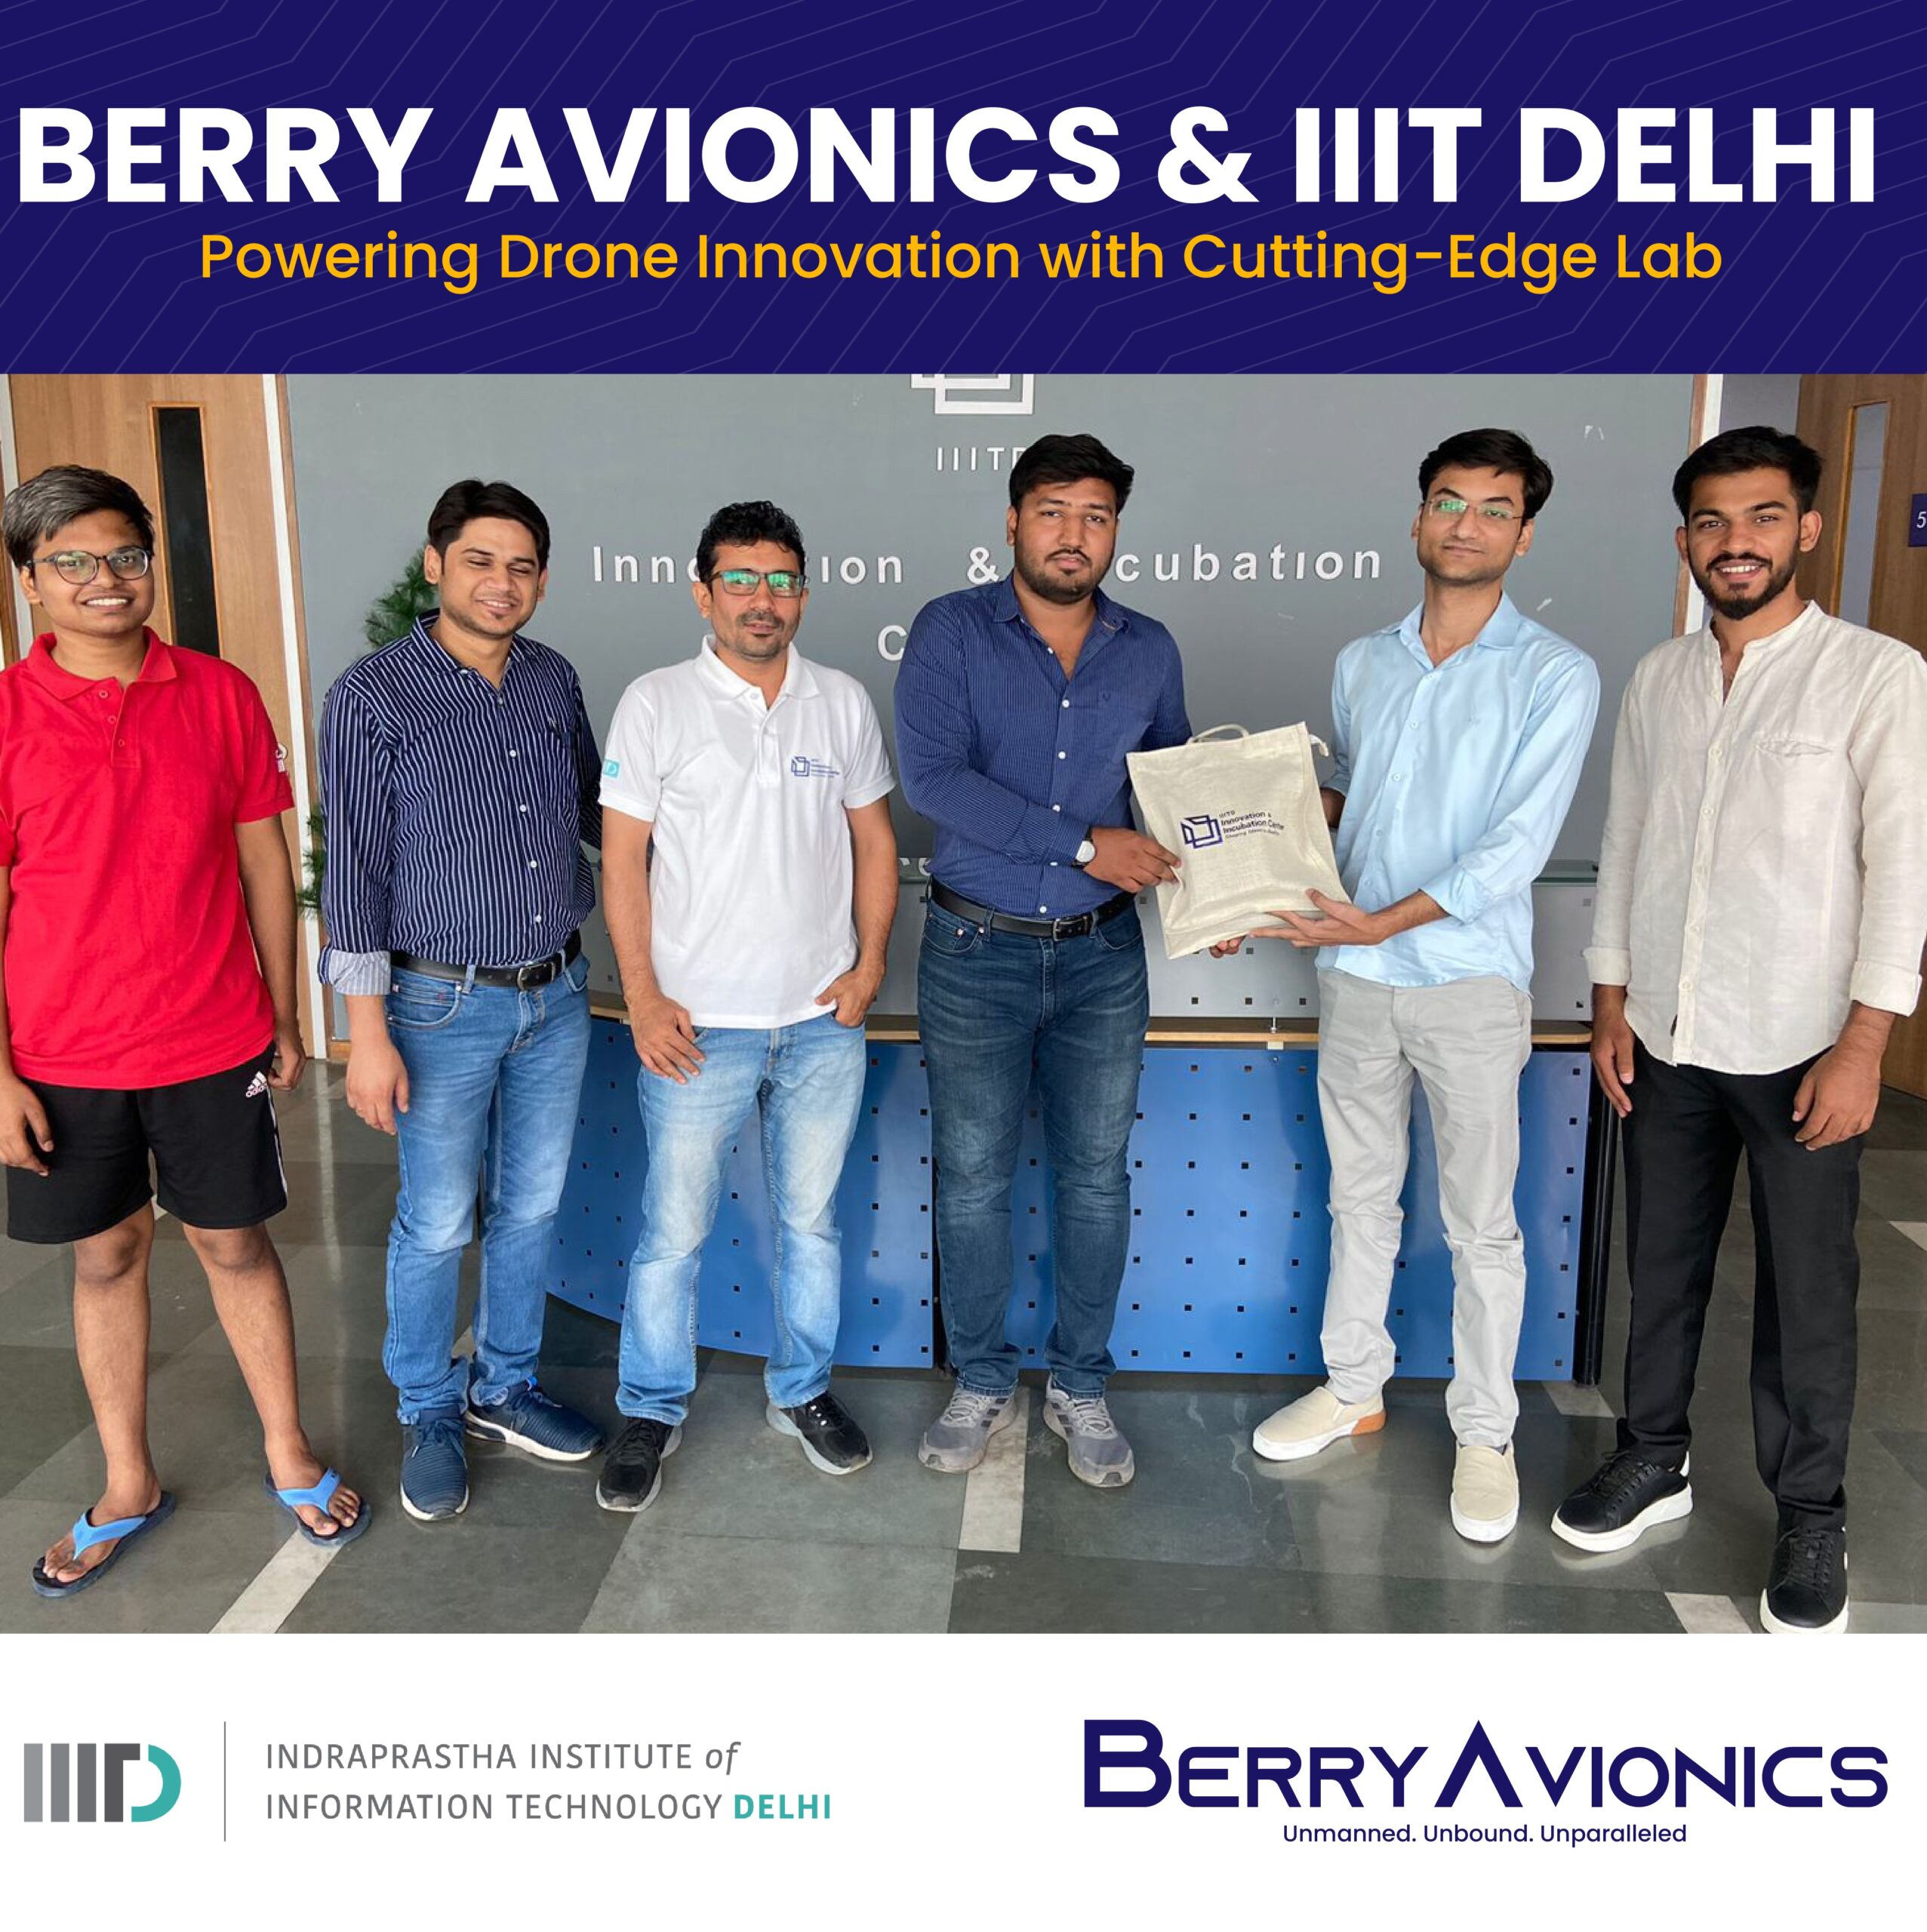 Uyes Inamdar Founder Berry Avionics at IIIT Delhi, Innocation and Incubation Center